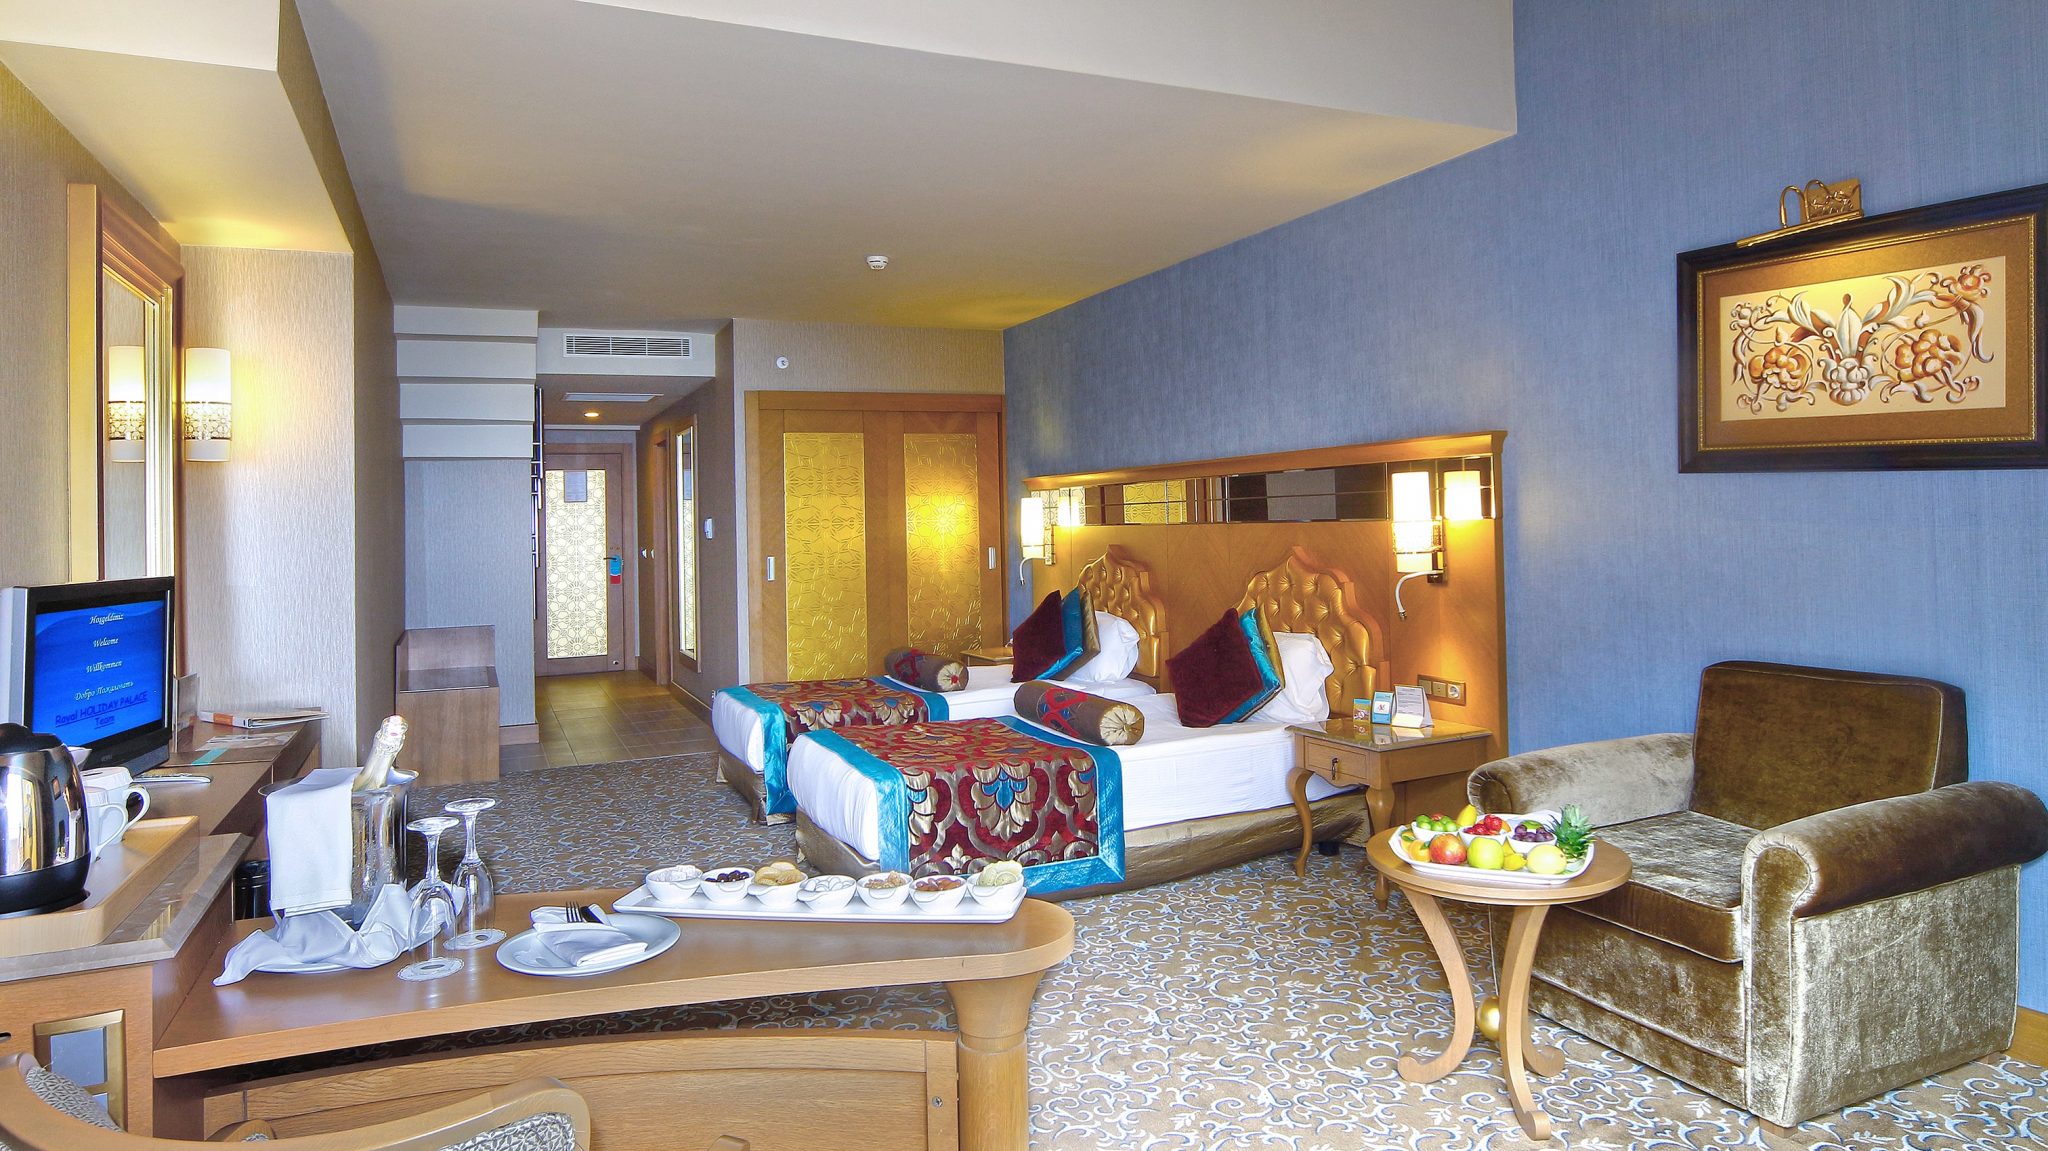 Letovanje_Turska_Hoteli_Avio_Antalija_Hotel_Royal_Holiday_Palace-18-scaled.jpg